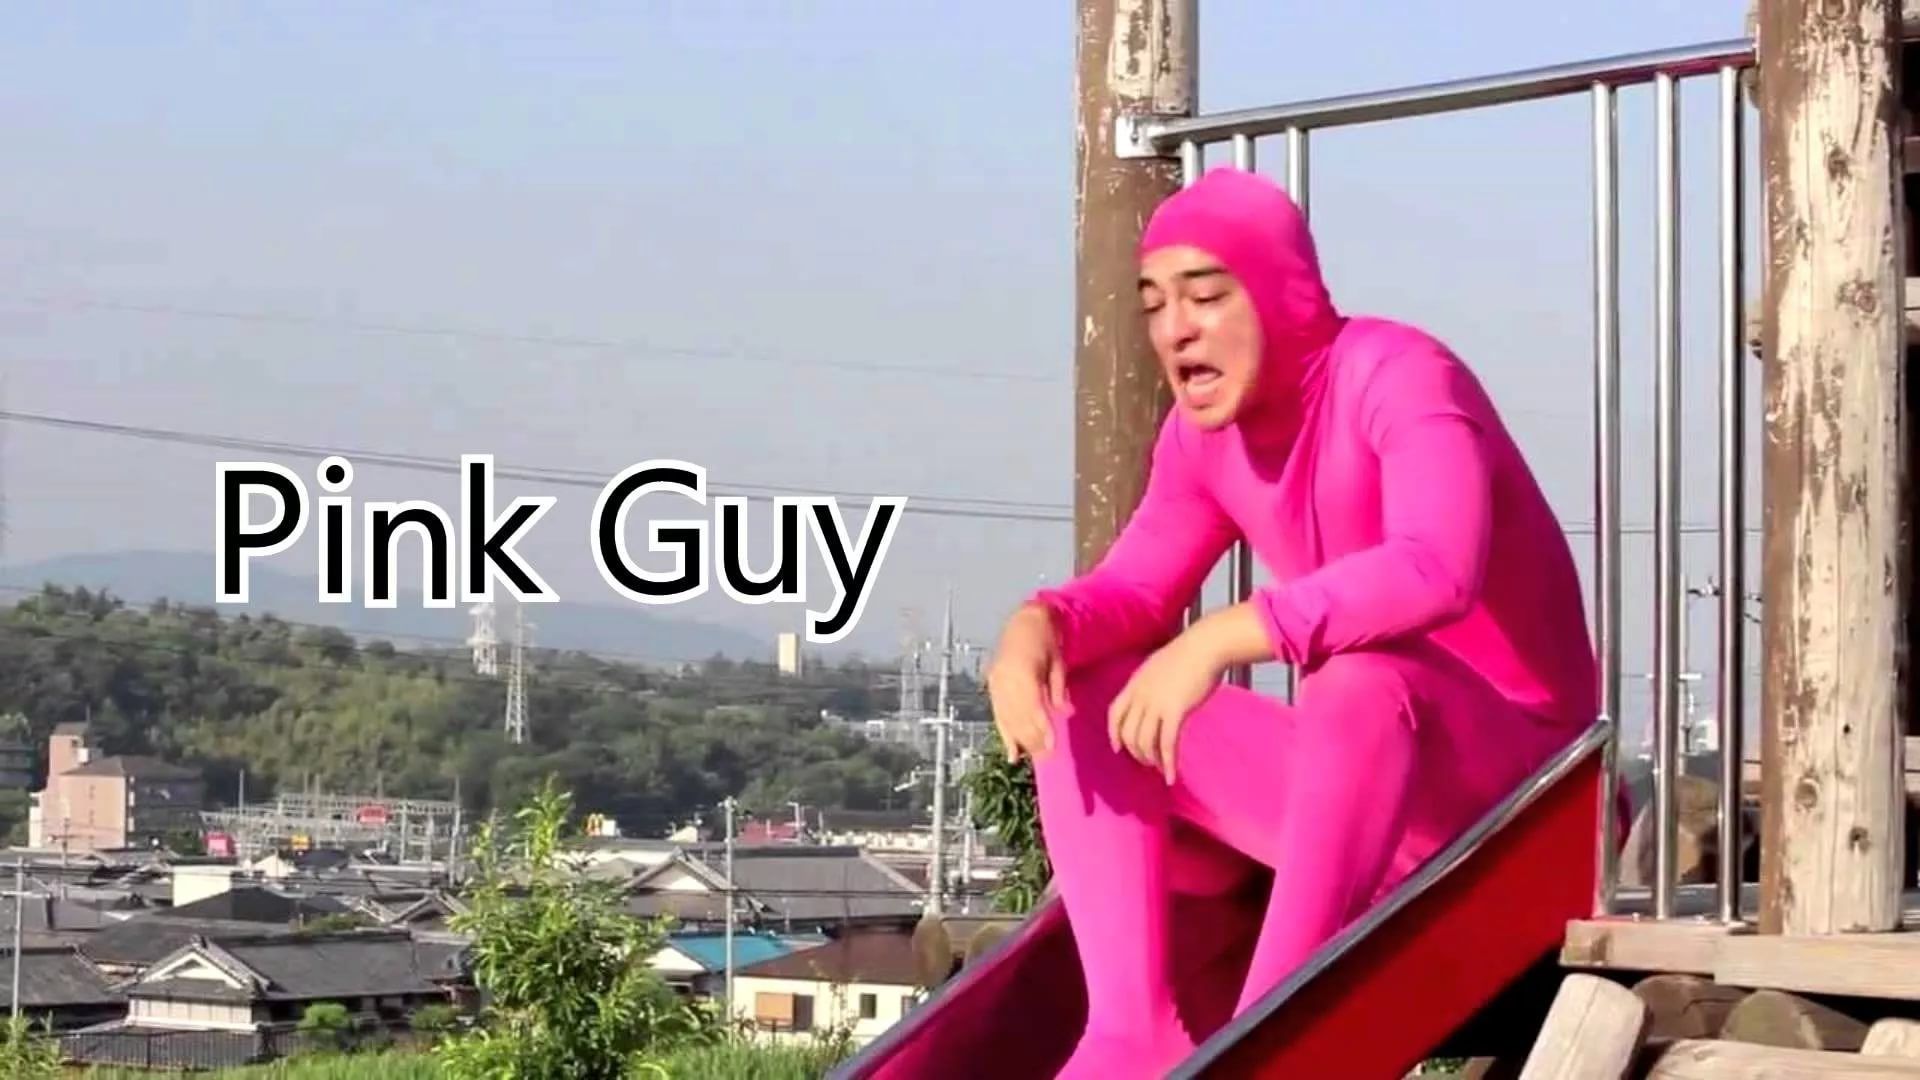 Pink Guy download wallpaper image